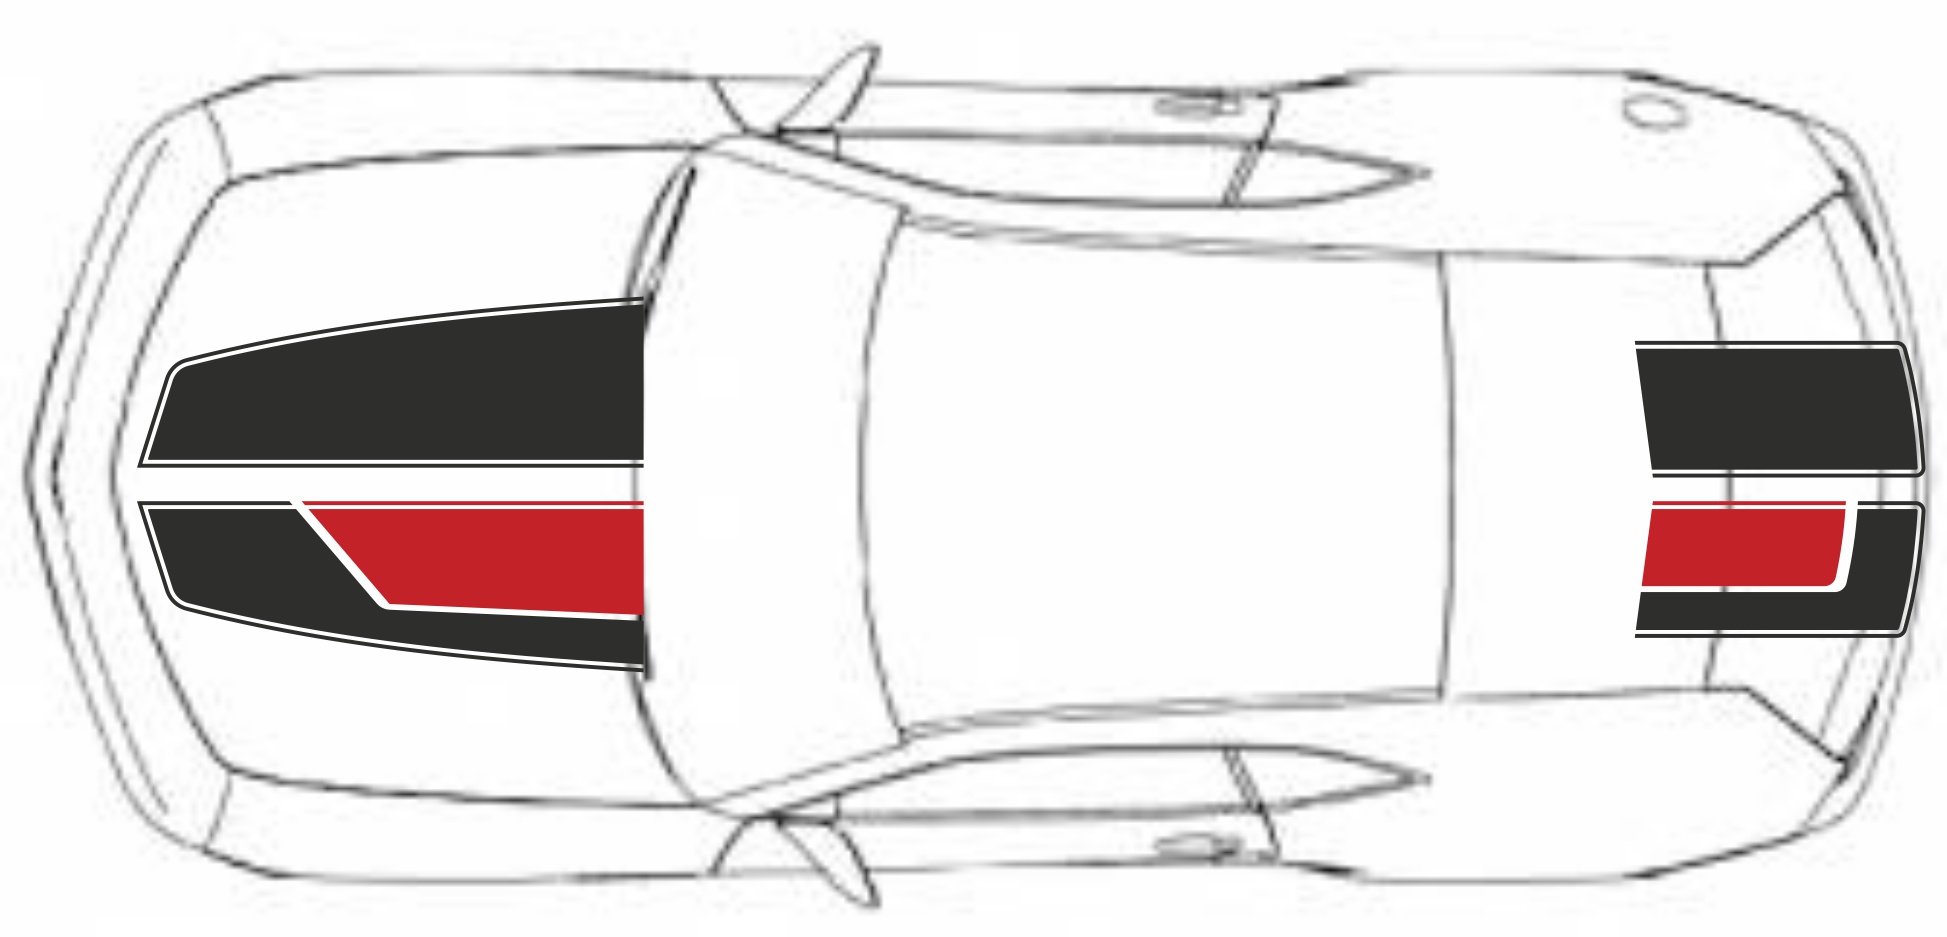 Chevrolet Camaro naklejki decals stripes sticker aufkleber nalepky